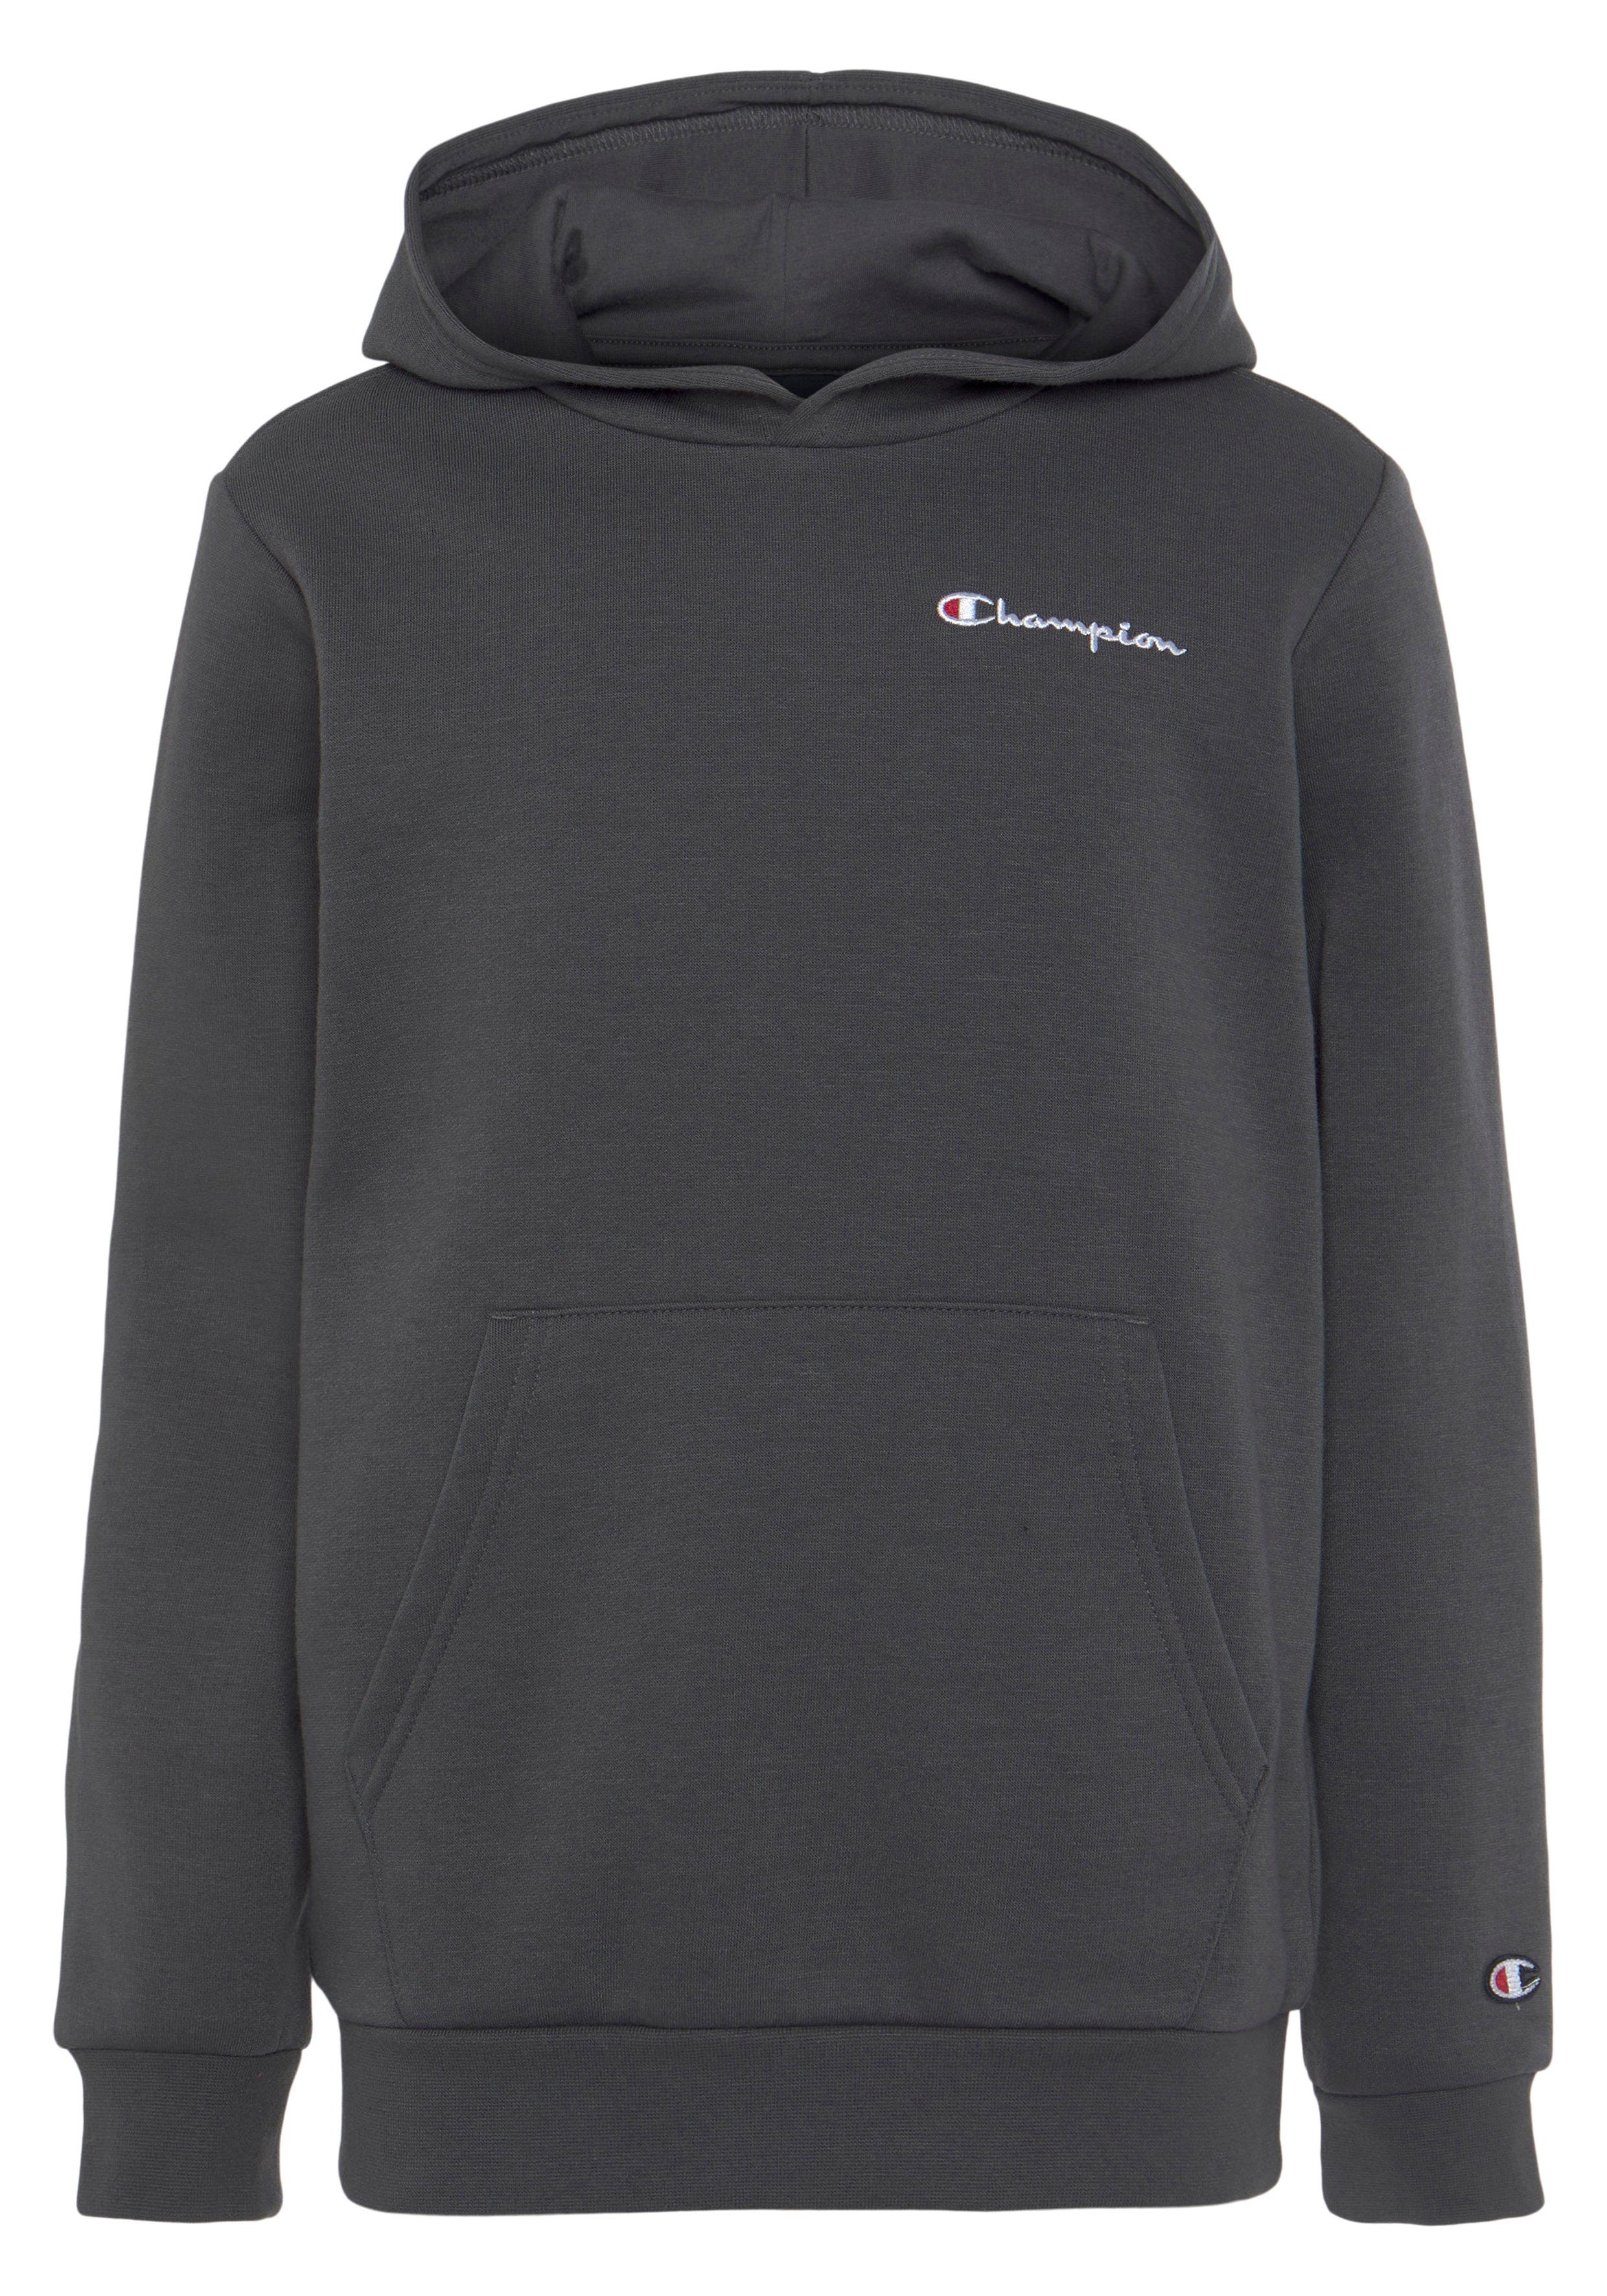 Sweatshirt Kinder Logo Hooded Classic grau small für - Champion Sweatshirt